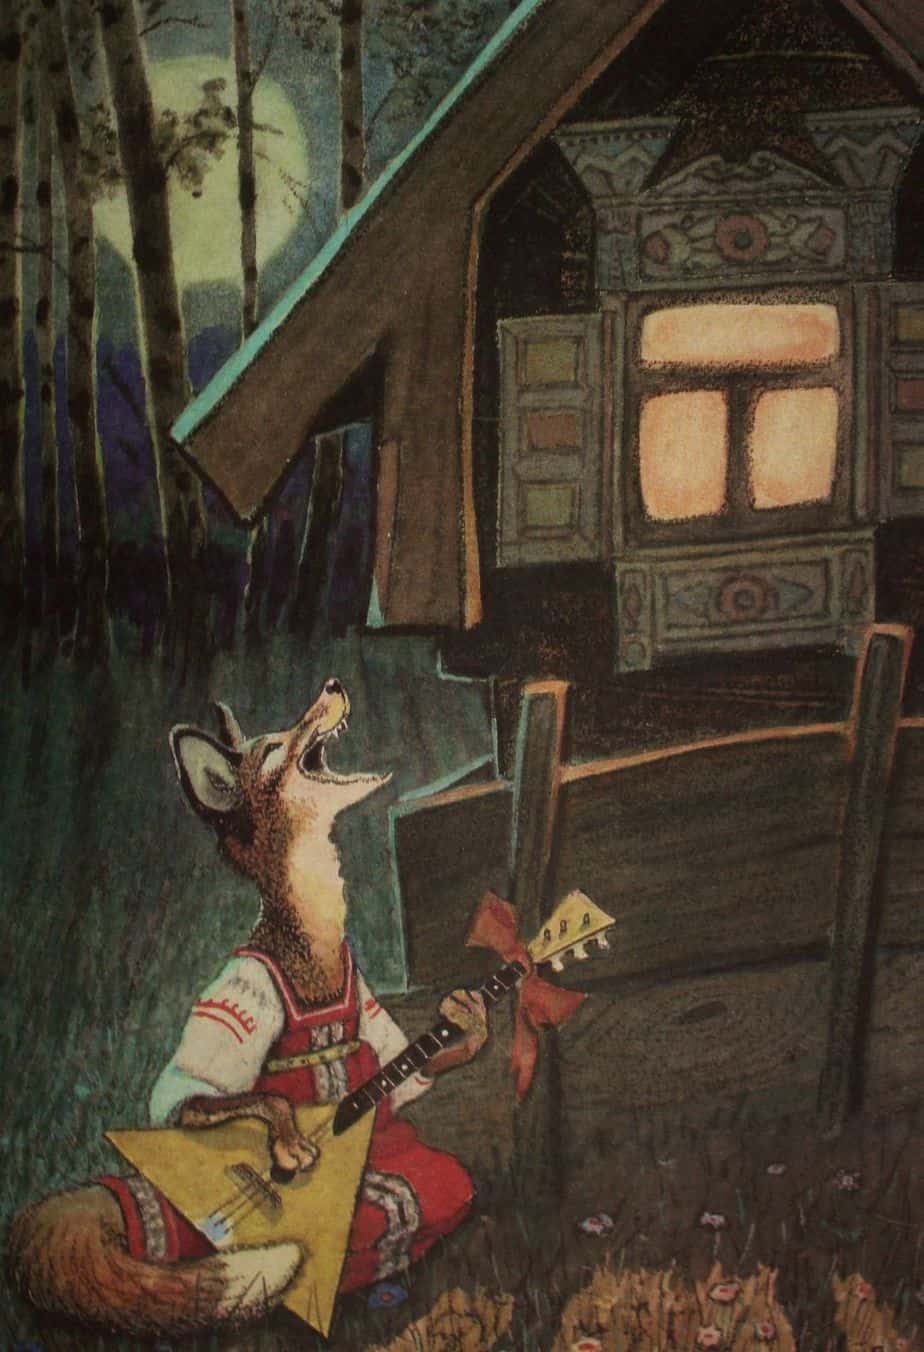 Yevgeny Rachyov (1906 - 1997) 1955 The Wolf's Song Ukrainian folk tale Illustration for a vintage Soviet postcard